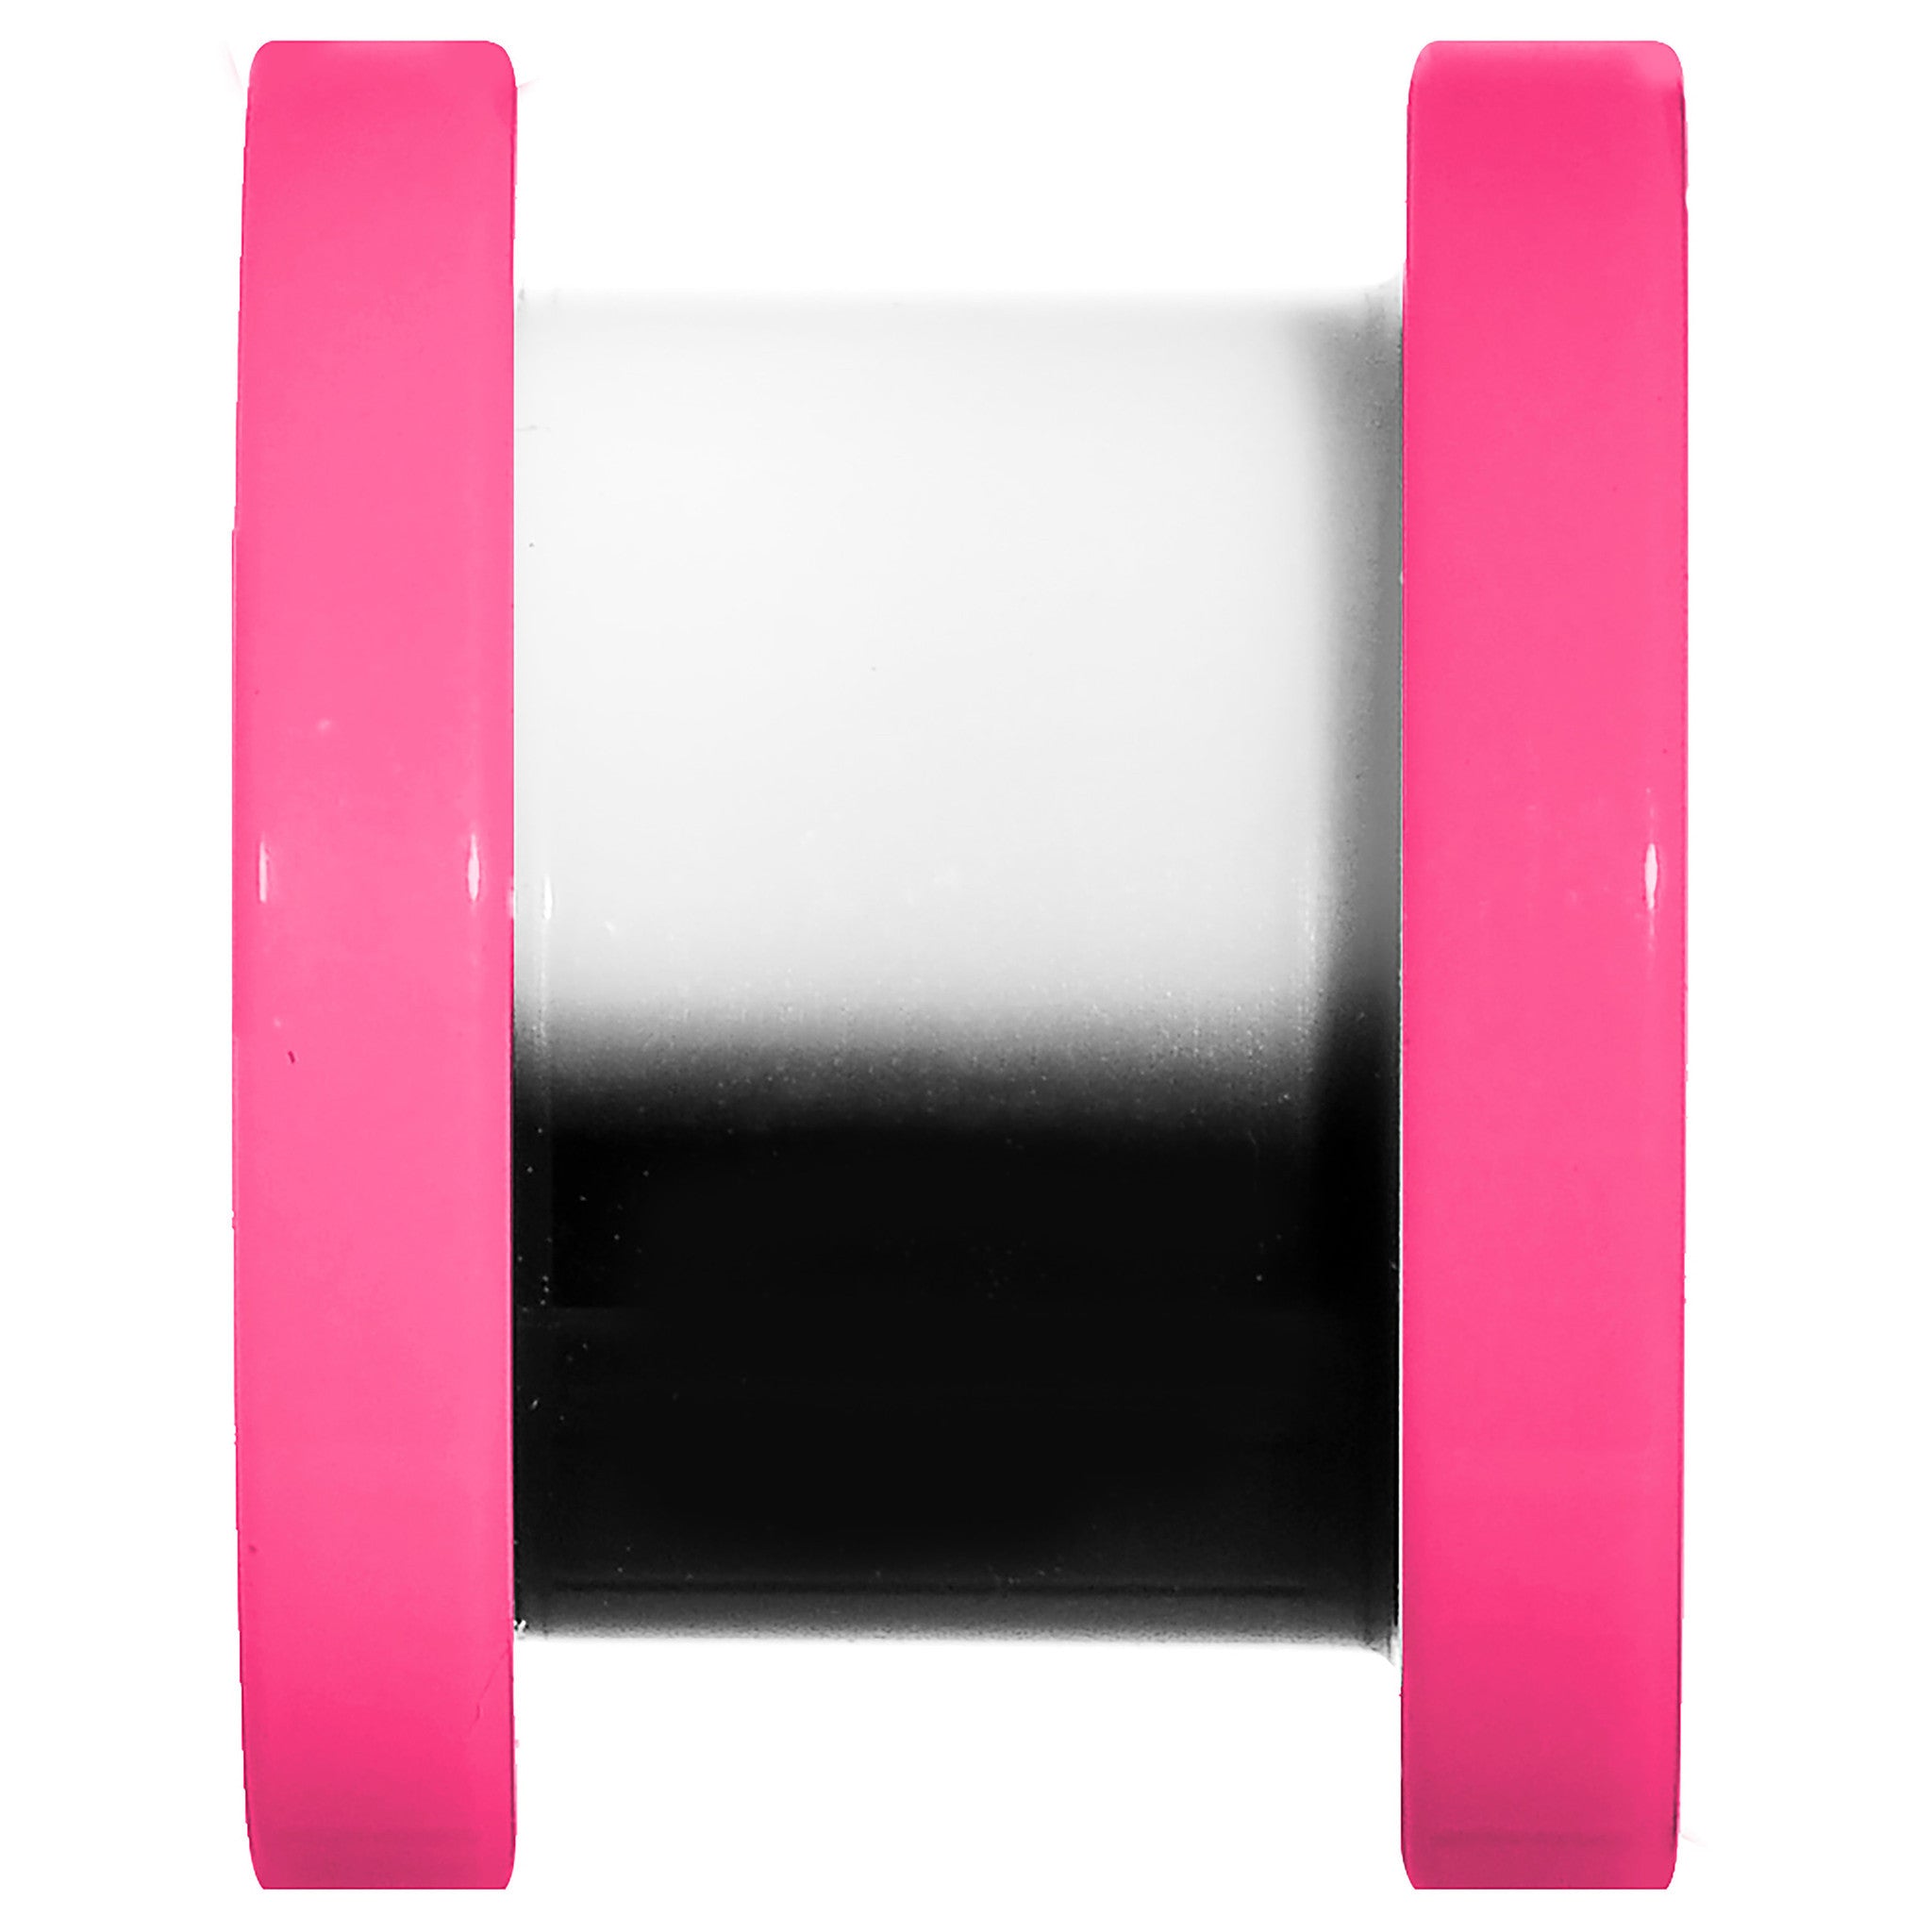 00 Gauge Pink Neon Acrylic Modern Yin Yang Screw Fit Tunnel Plug